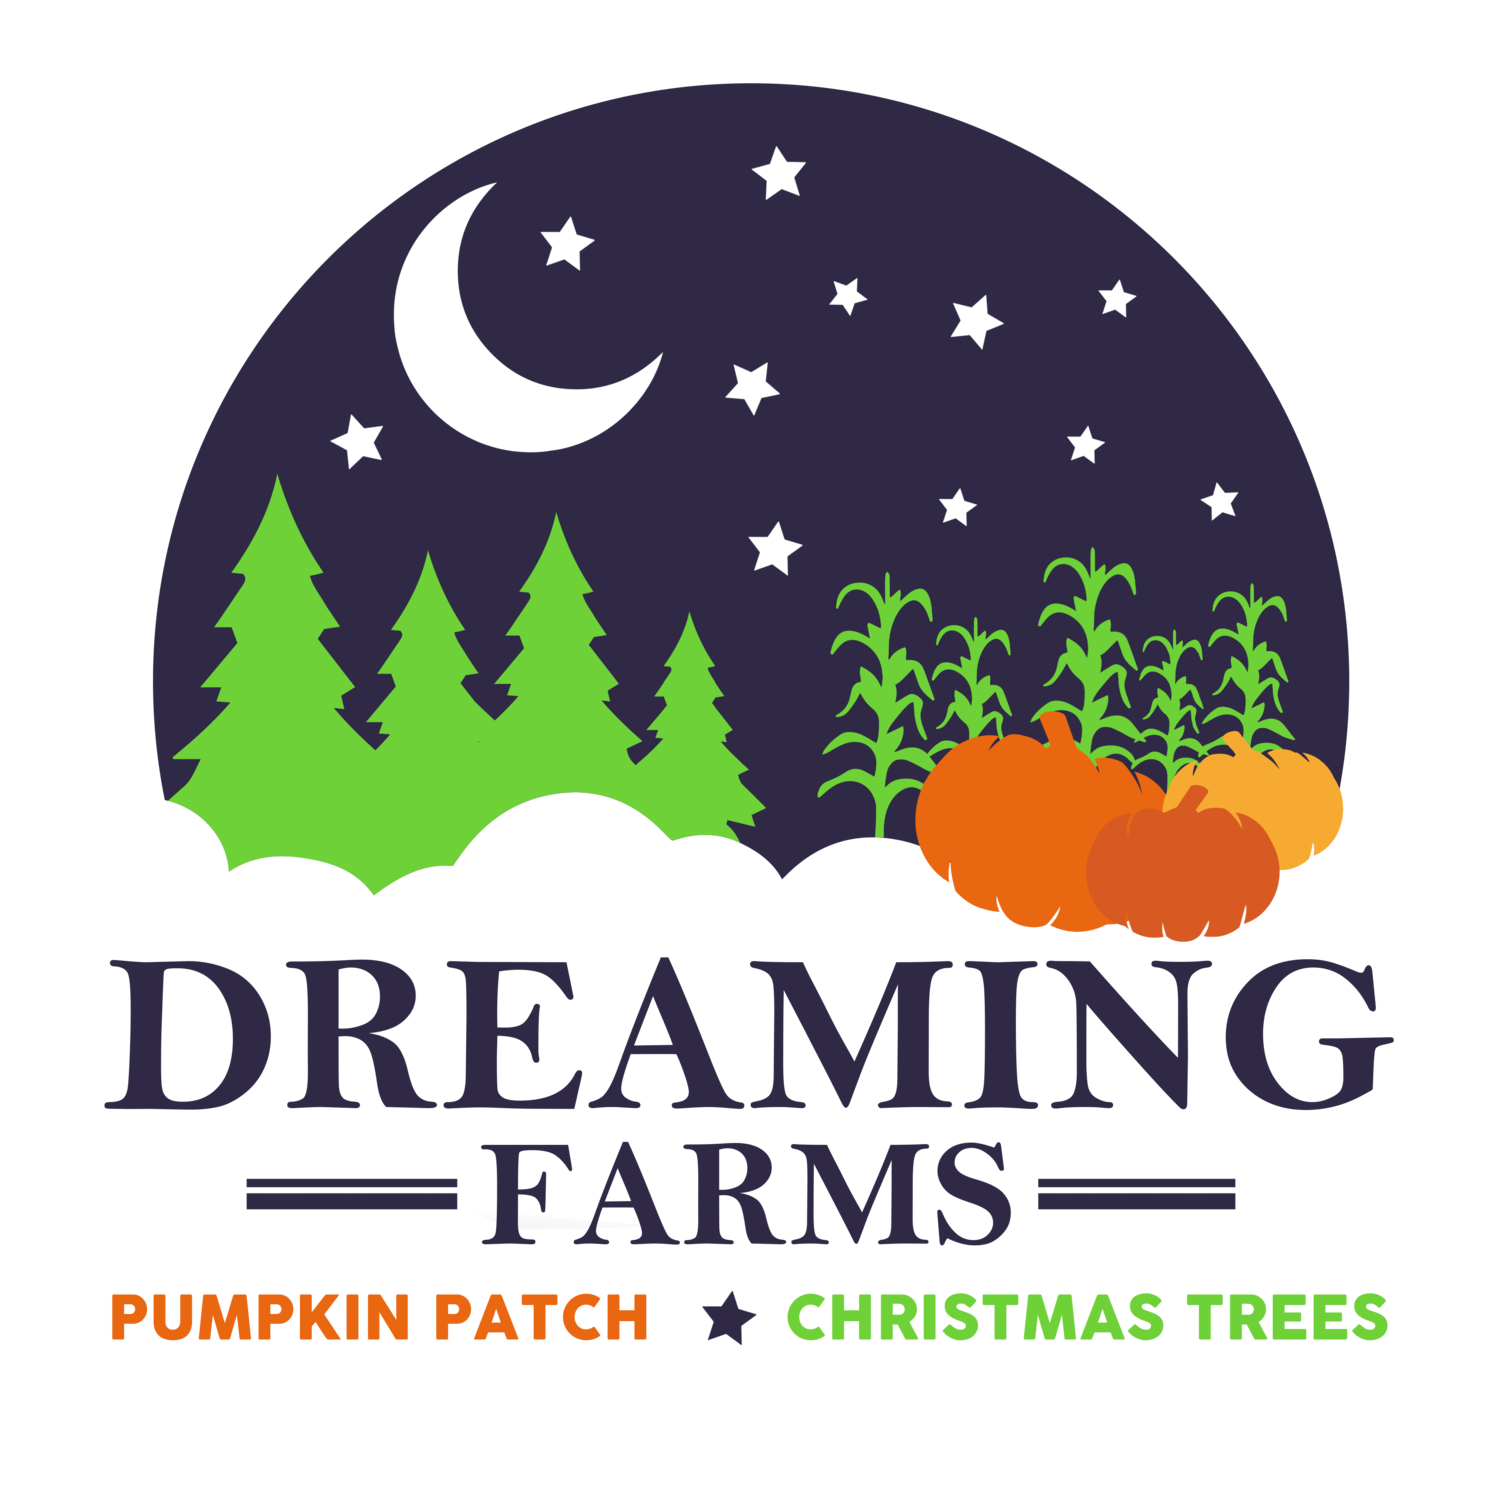 Dreaming Farms